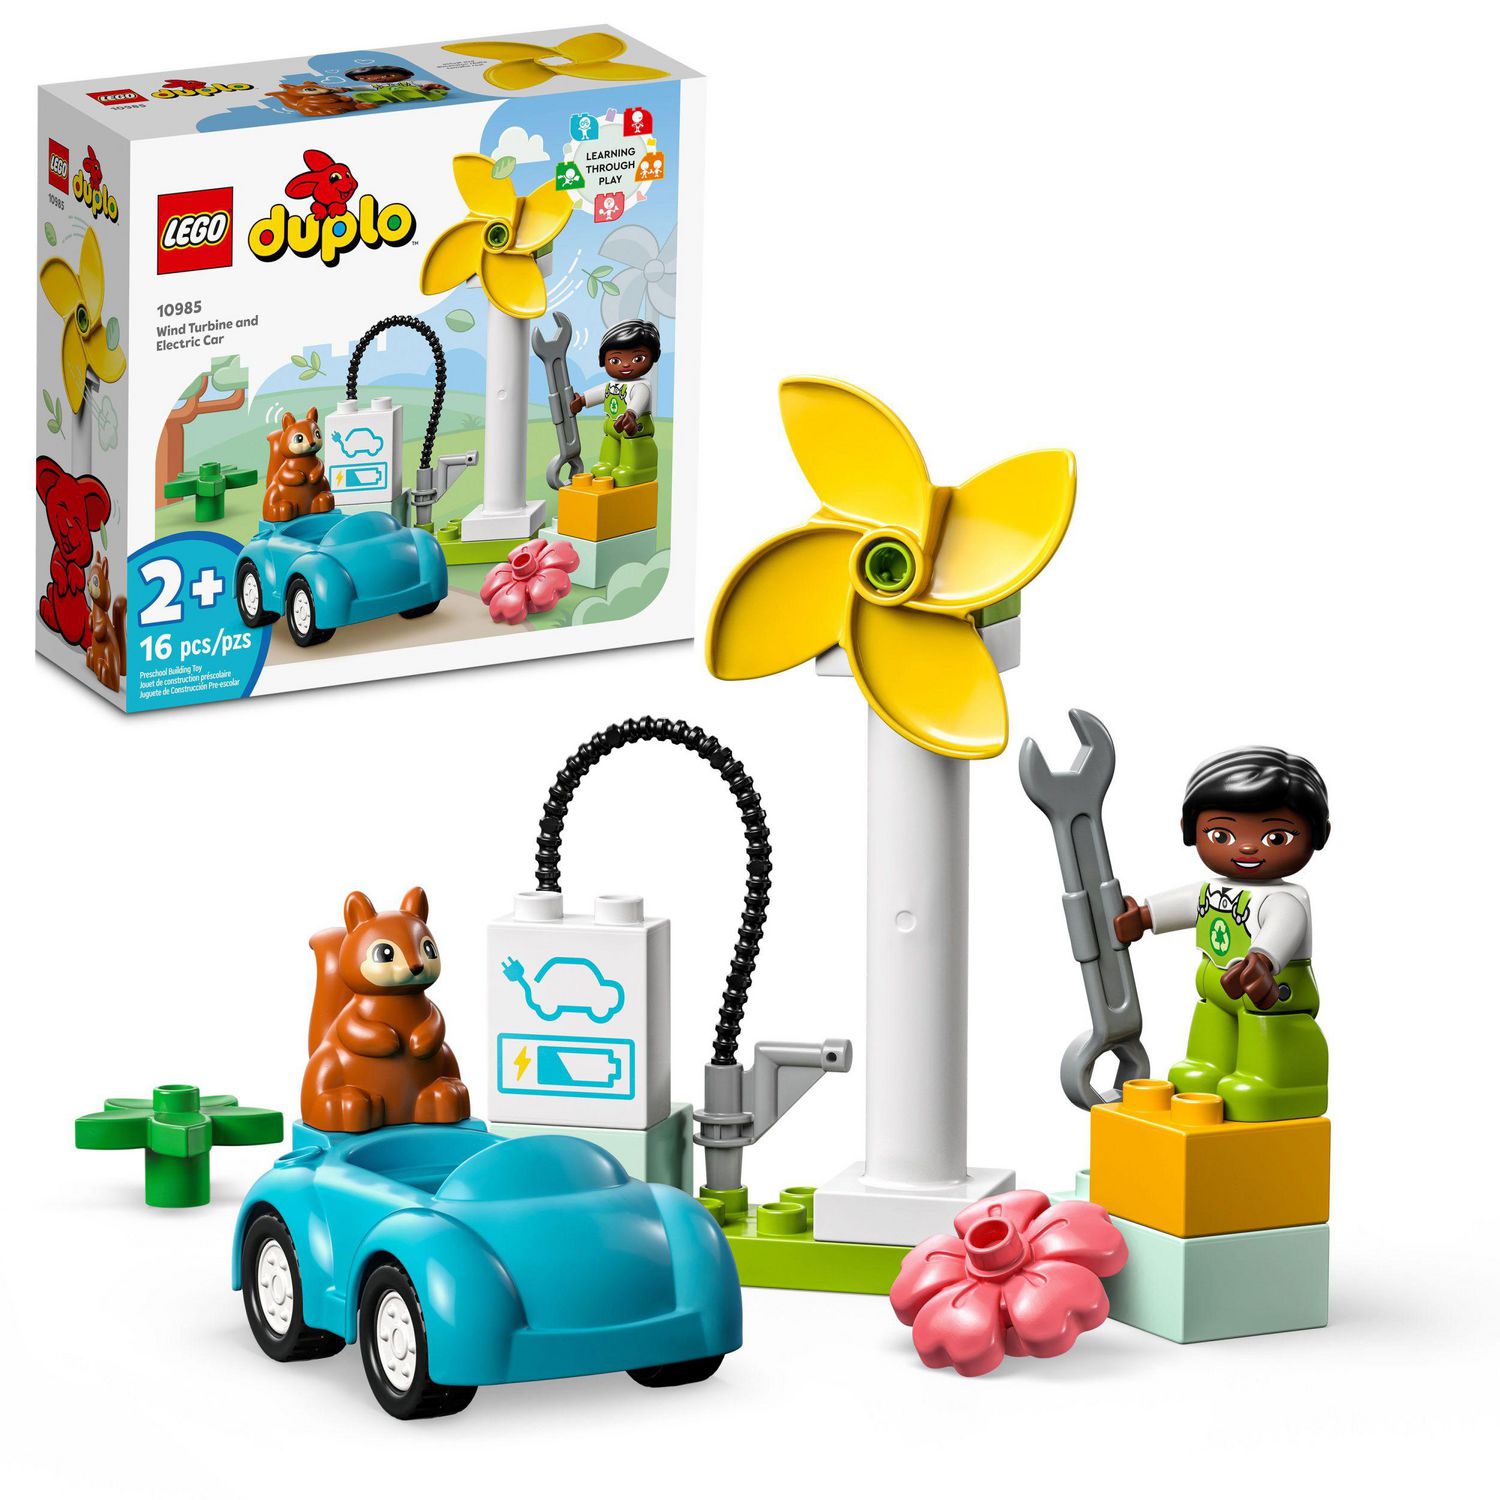 LEGO DUPLO Town DUPLO Town 10985 10985 Toy Building Kit (16 Pieces) | Walmart Canada